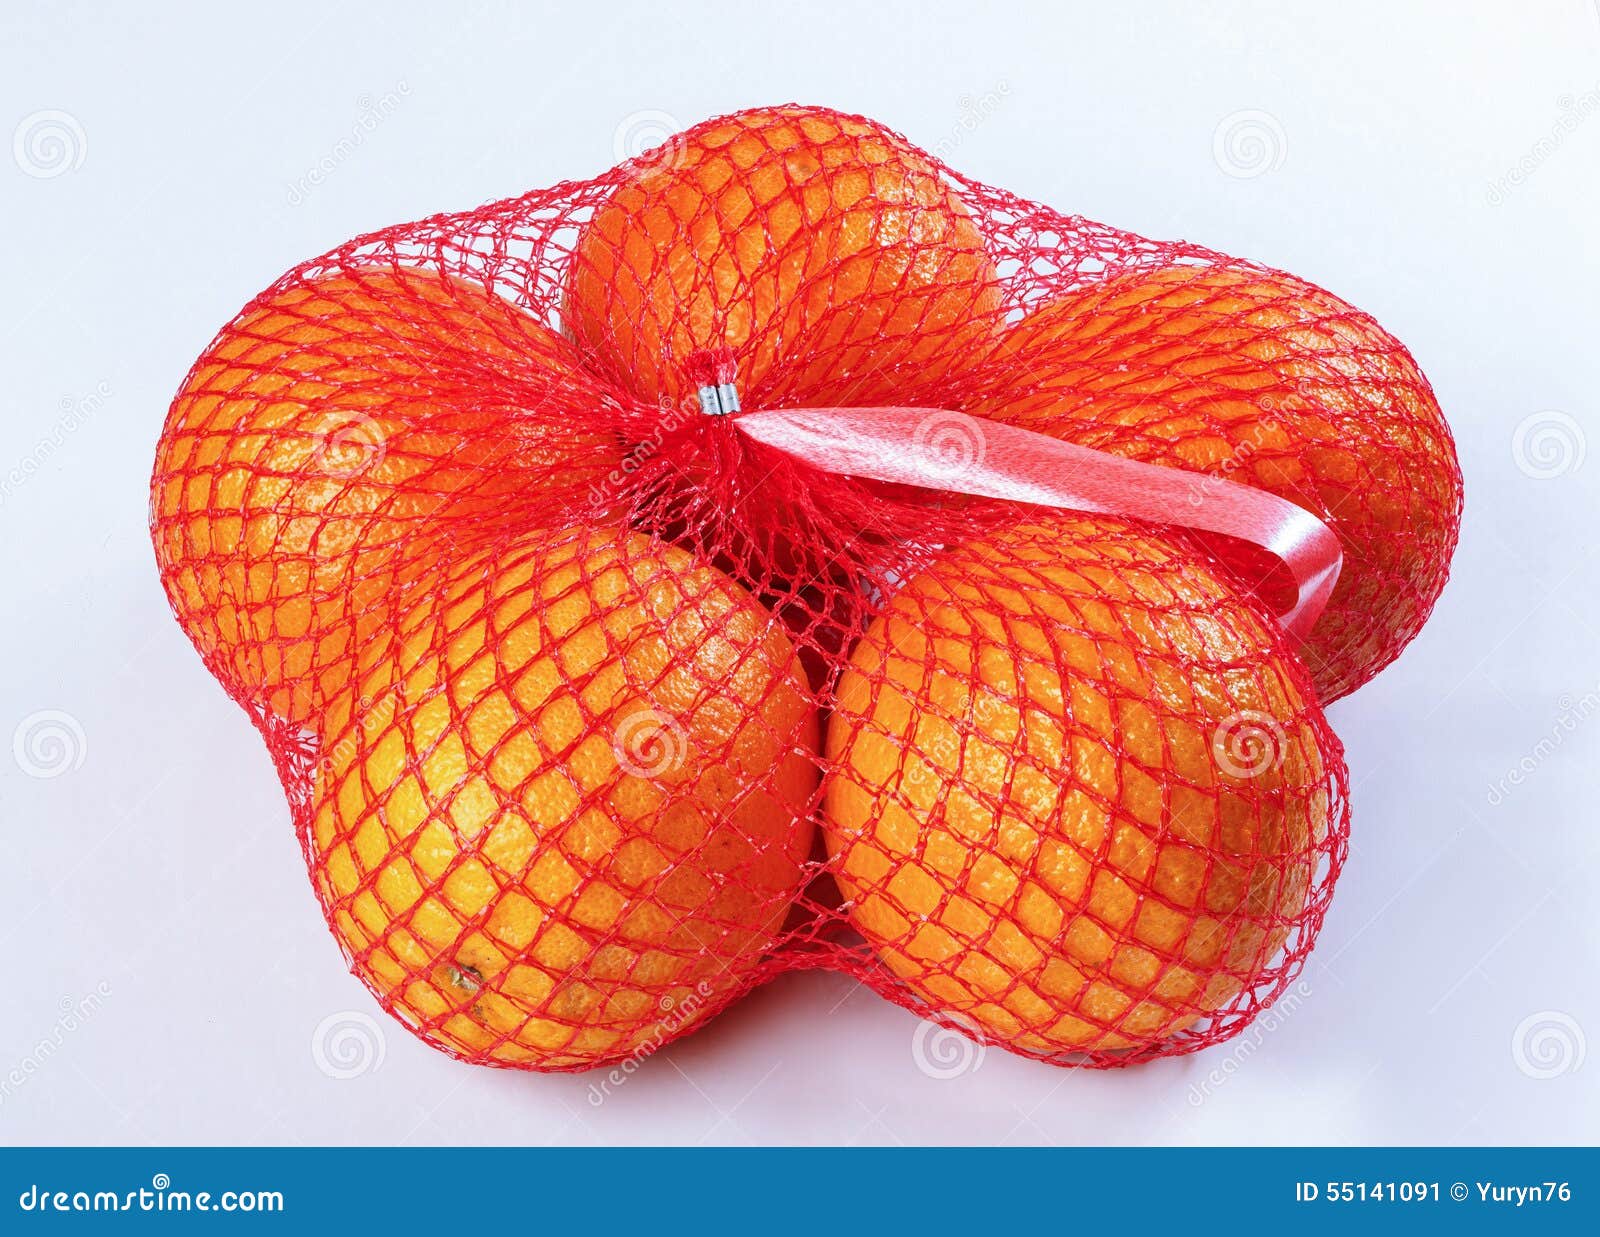 packaging-oranges-packing-orange-food-bag-group-netting-market-fruit-colored-shape-plastic-citrus-carry-organic-horizontal-red-55141091.jpg